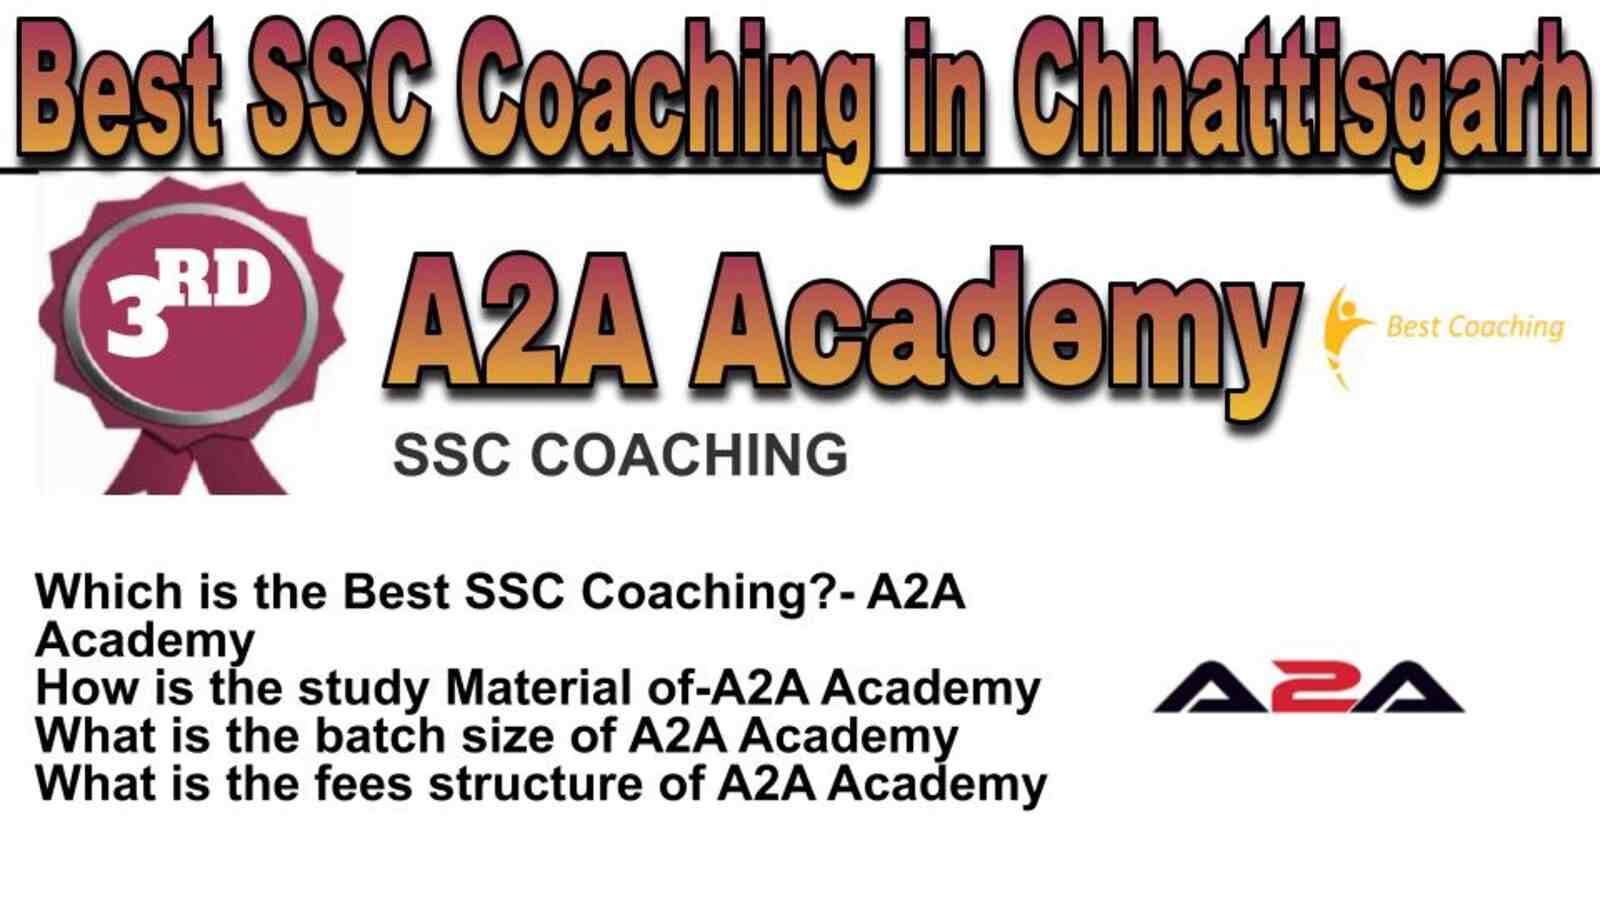 Rank 3 best SSC coaching in Chhattisgarh